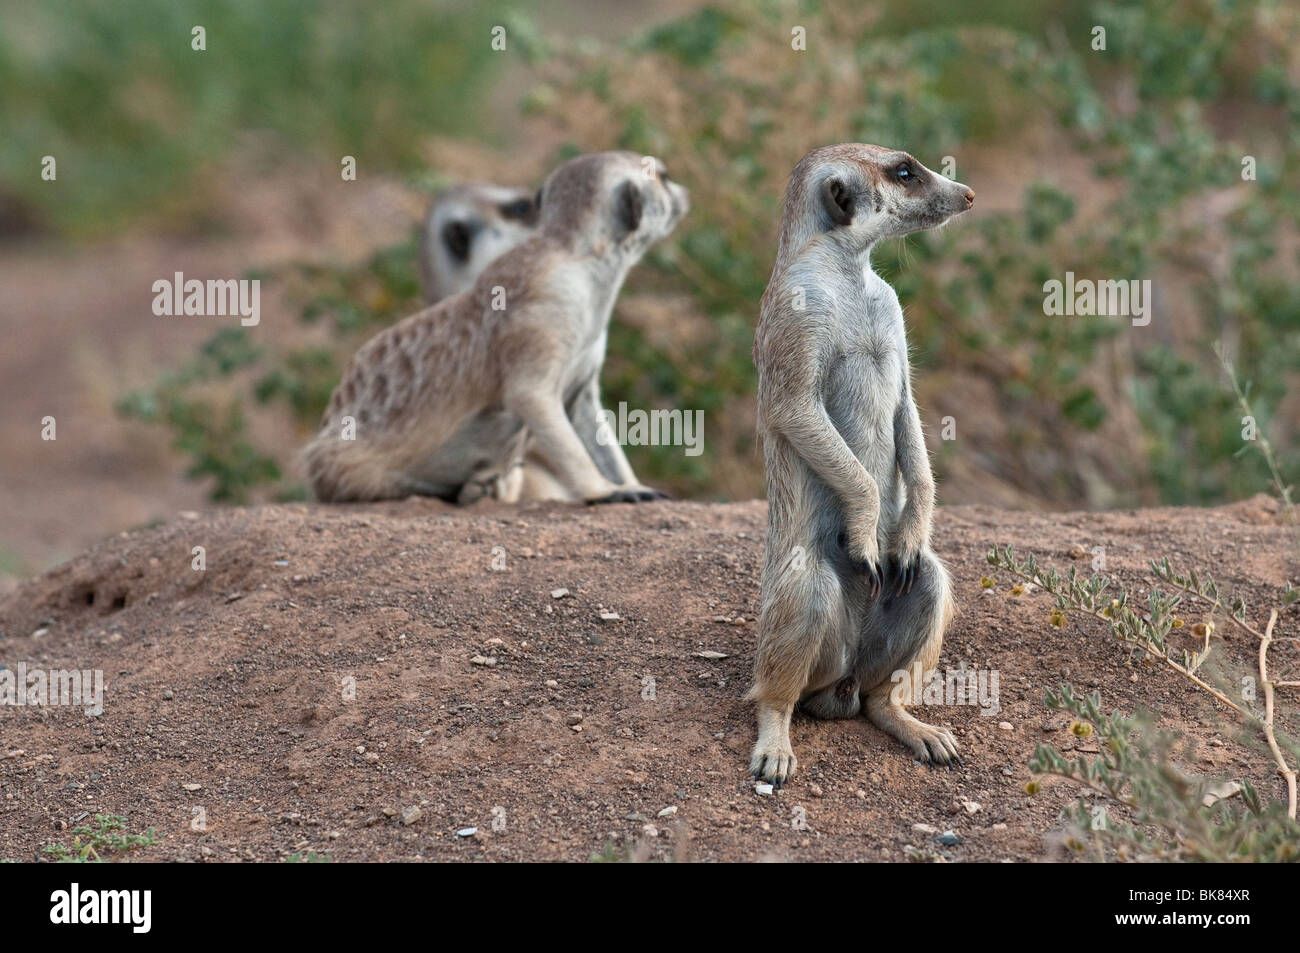 A clan of Meerkats on lookout near Keetmanshoop, Namibia, Africa Stock Photo